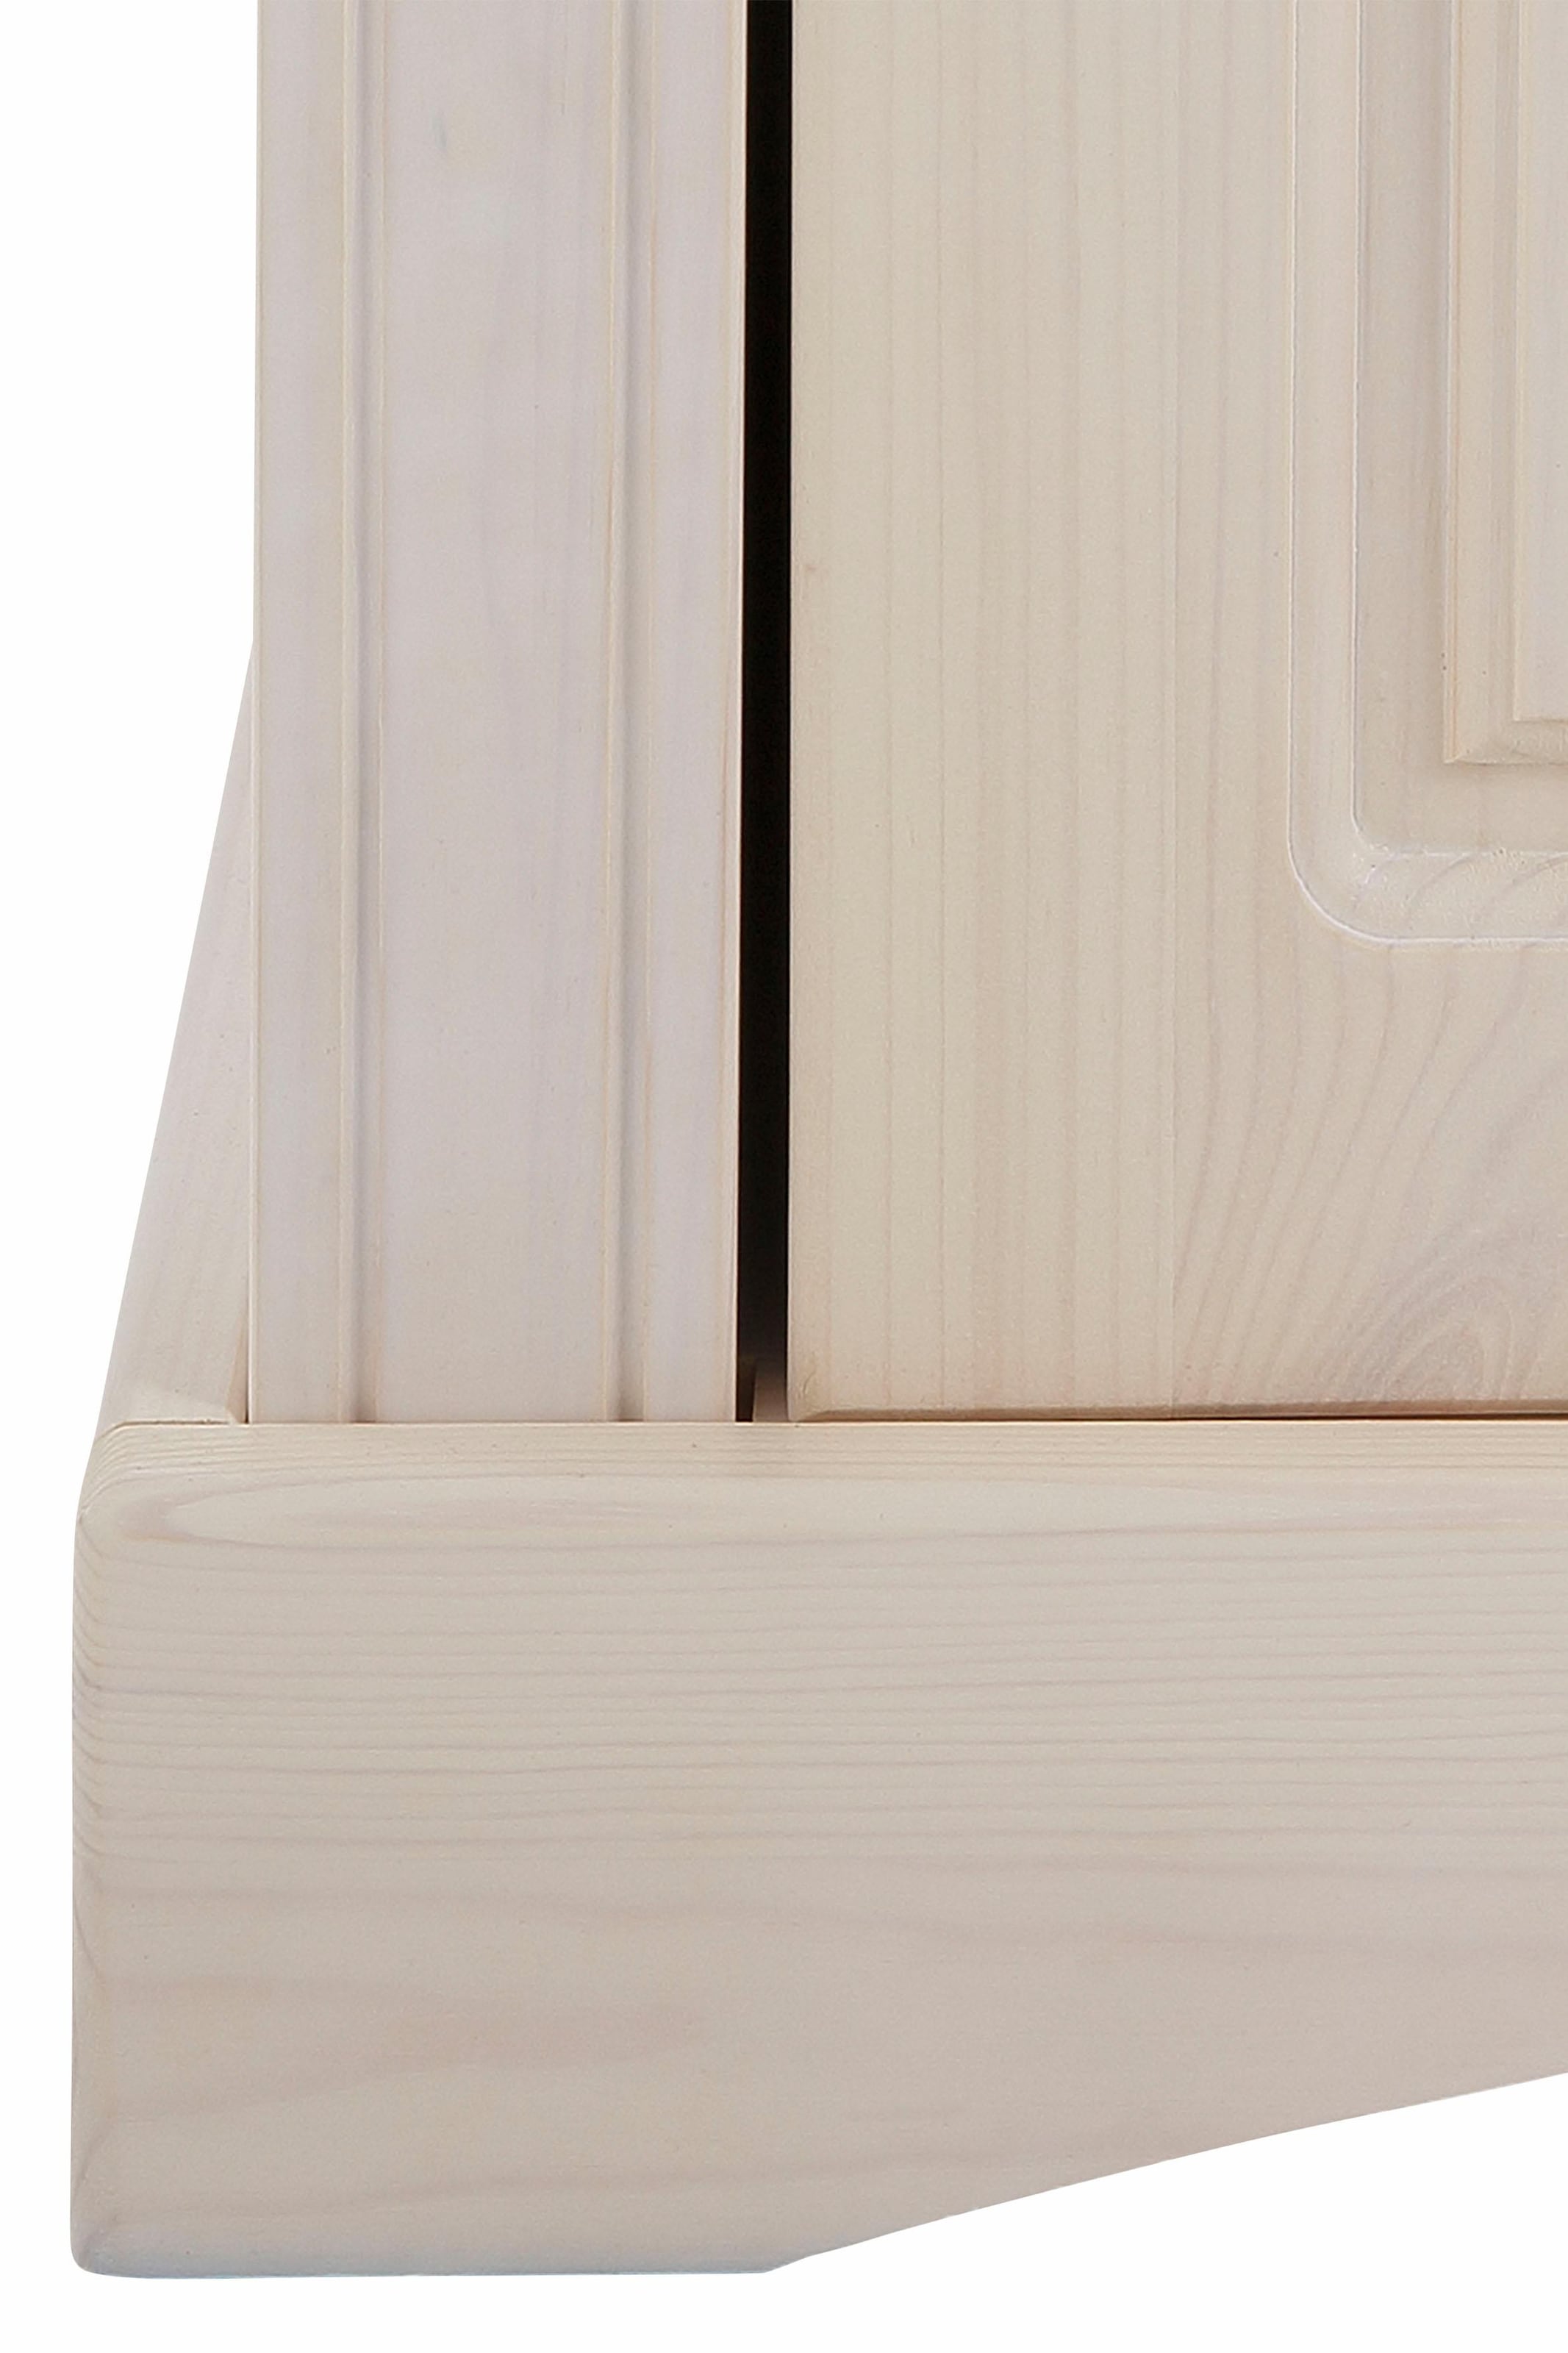 Home affaire Schuhschrank »Rustic«, aus massiver Kiefer, Breite 71 cm, FSC®-zertifiziert